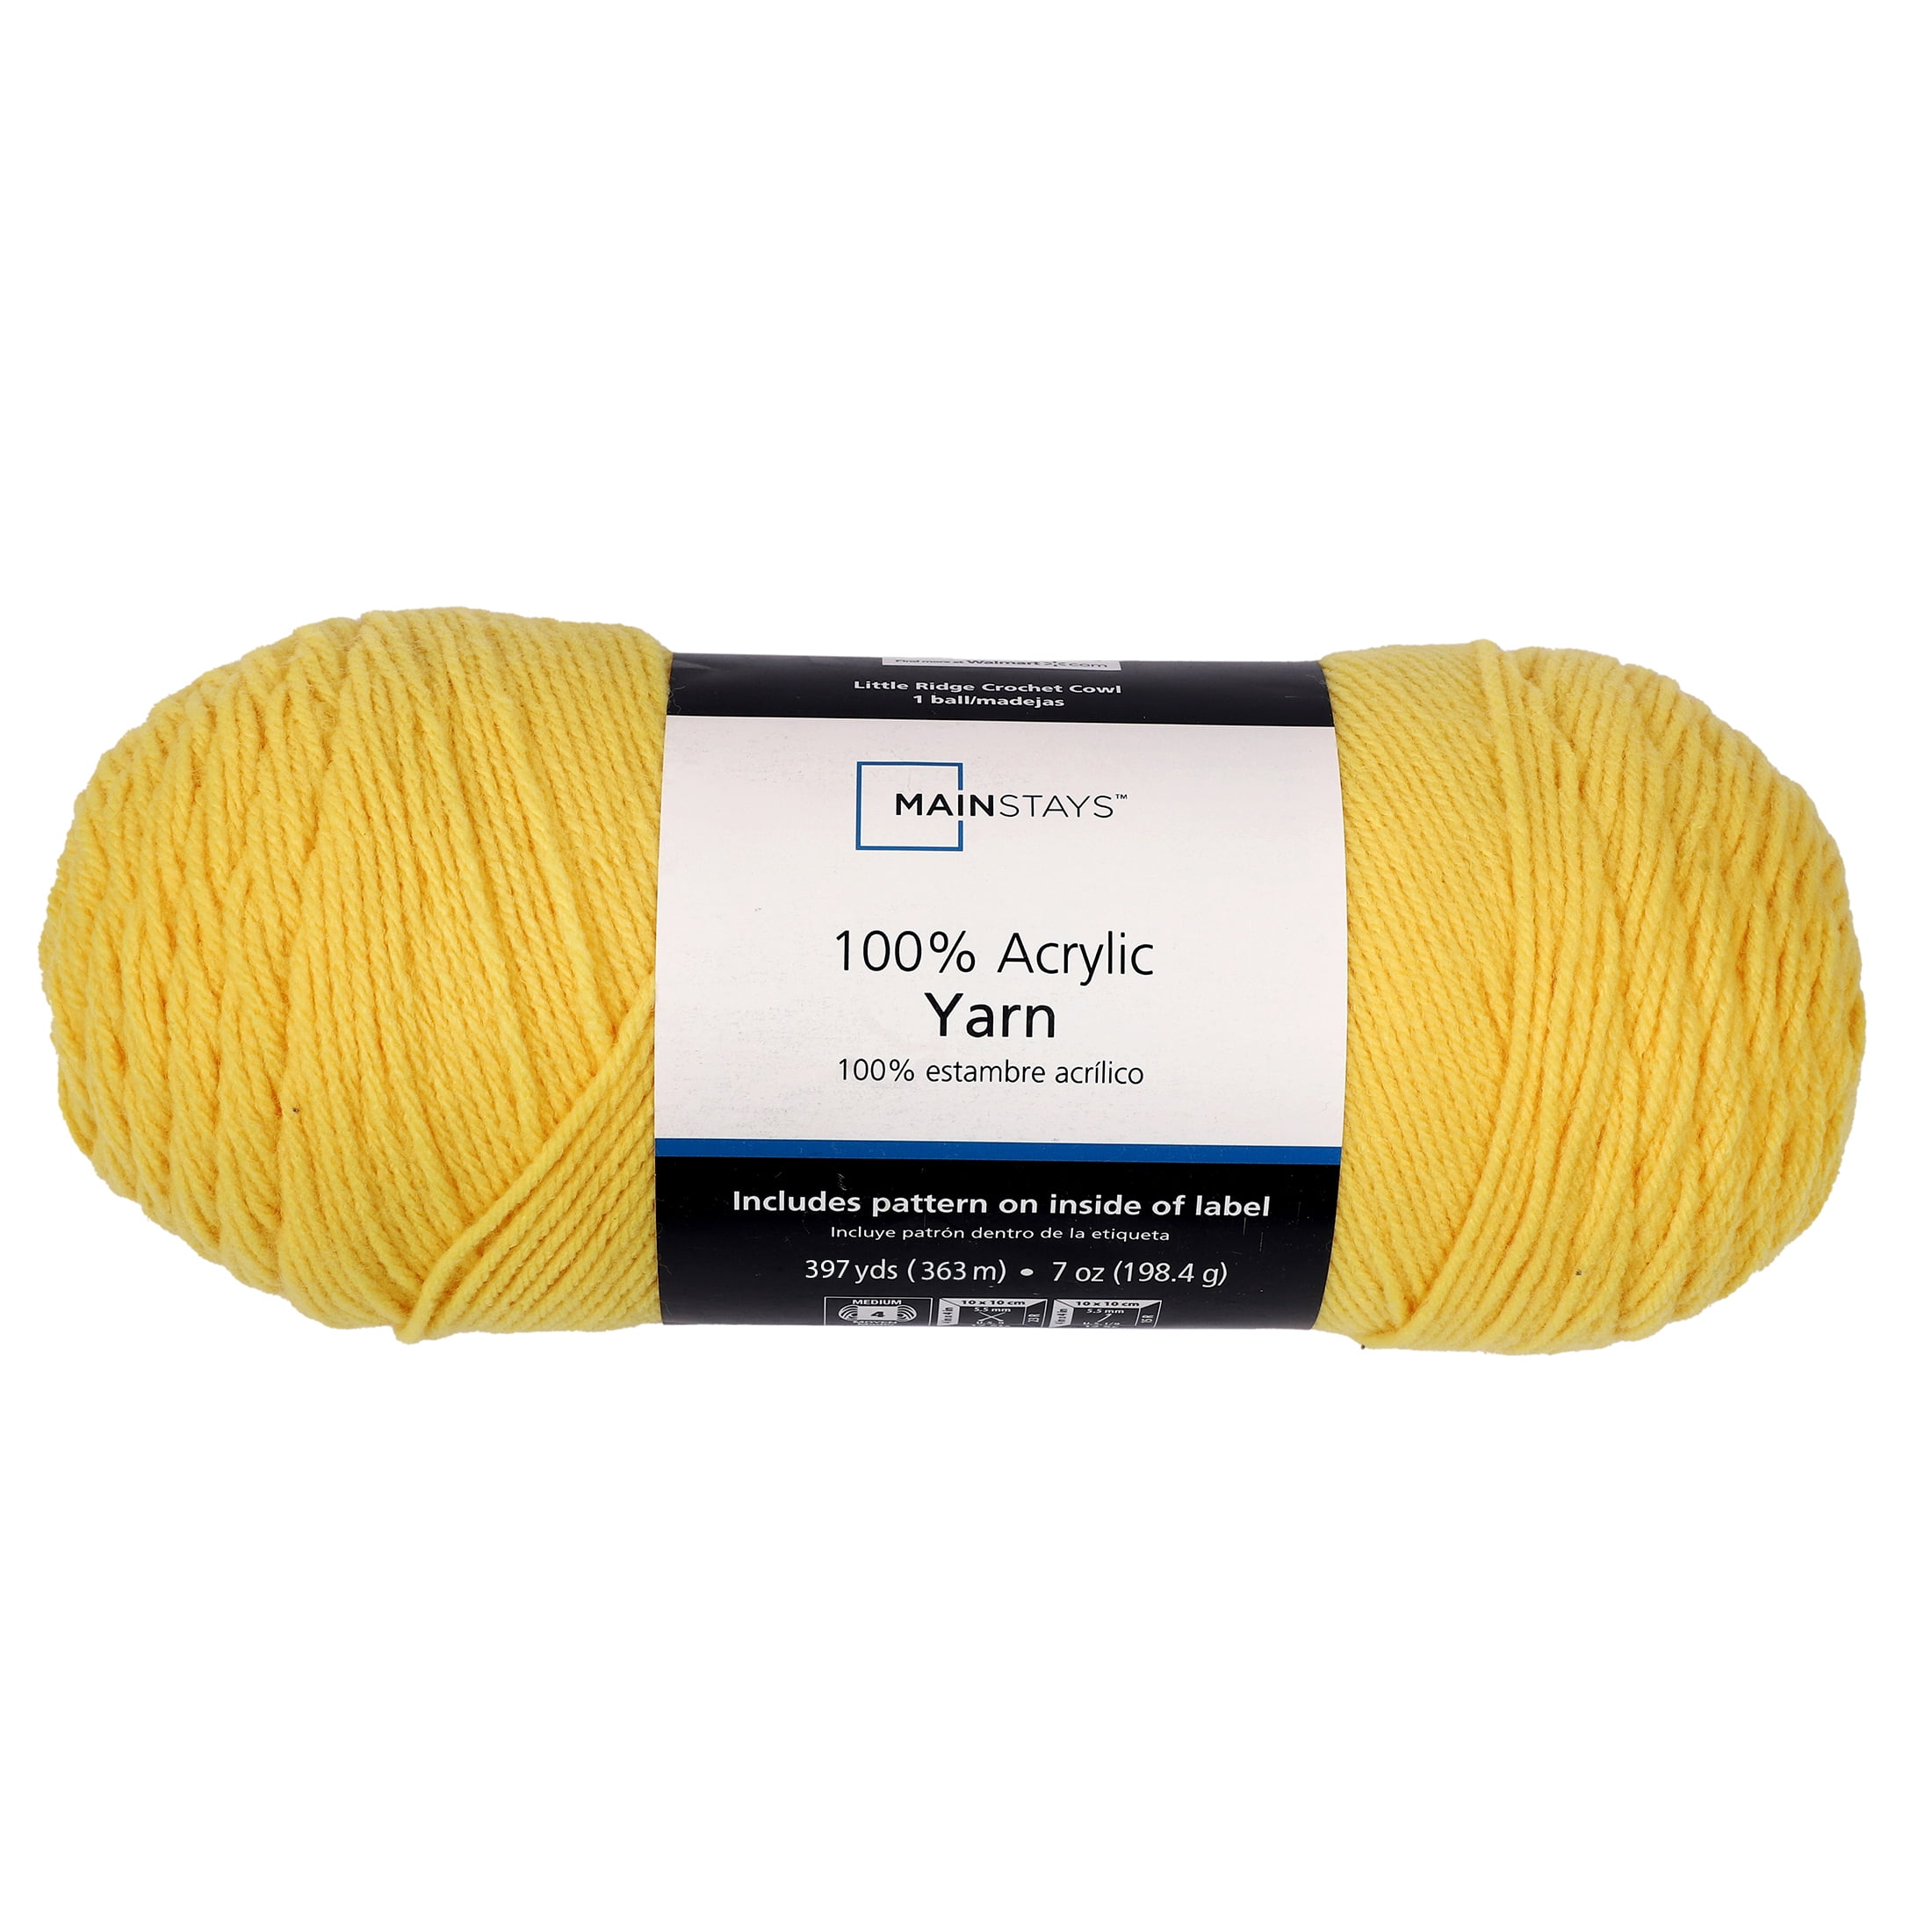 Astún by Lanas Stop Super Bulky Yarn 55percent Acrylic, 45percent Wool  69yards / 100 Grams 